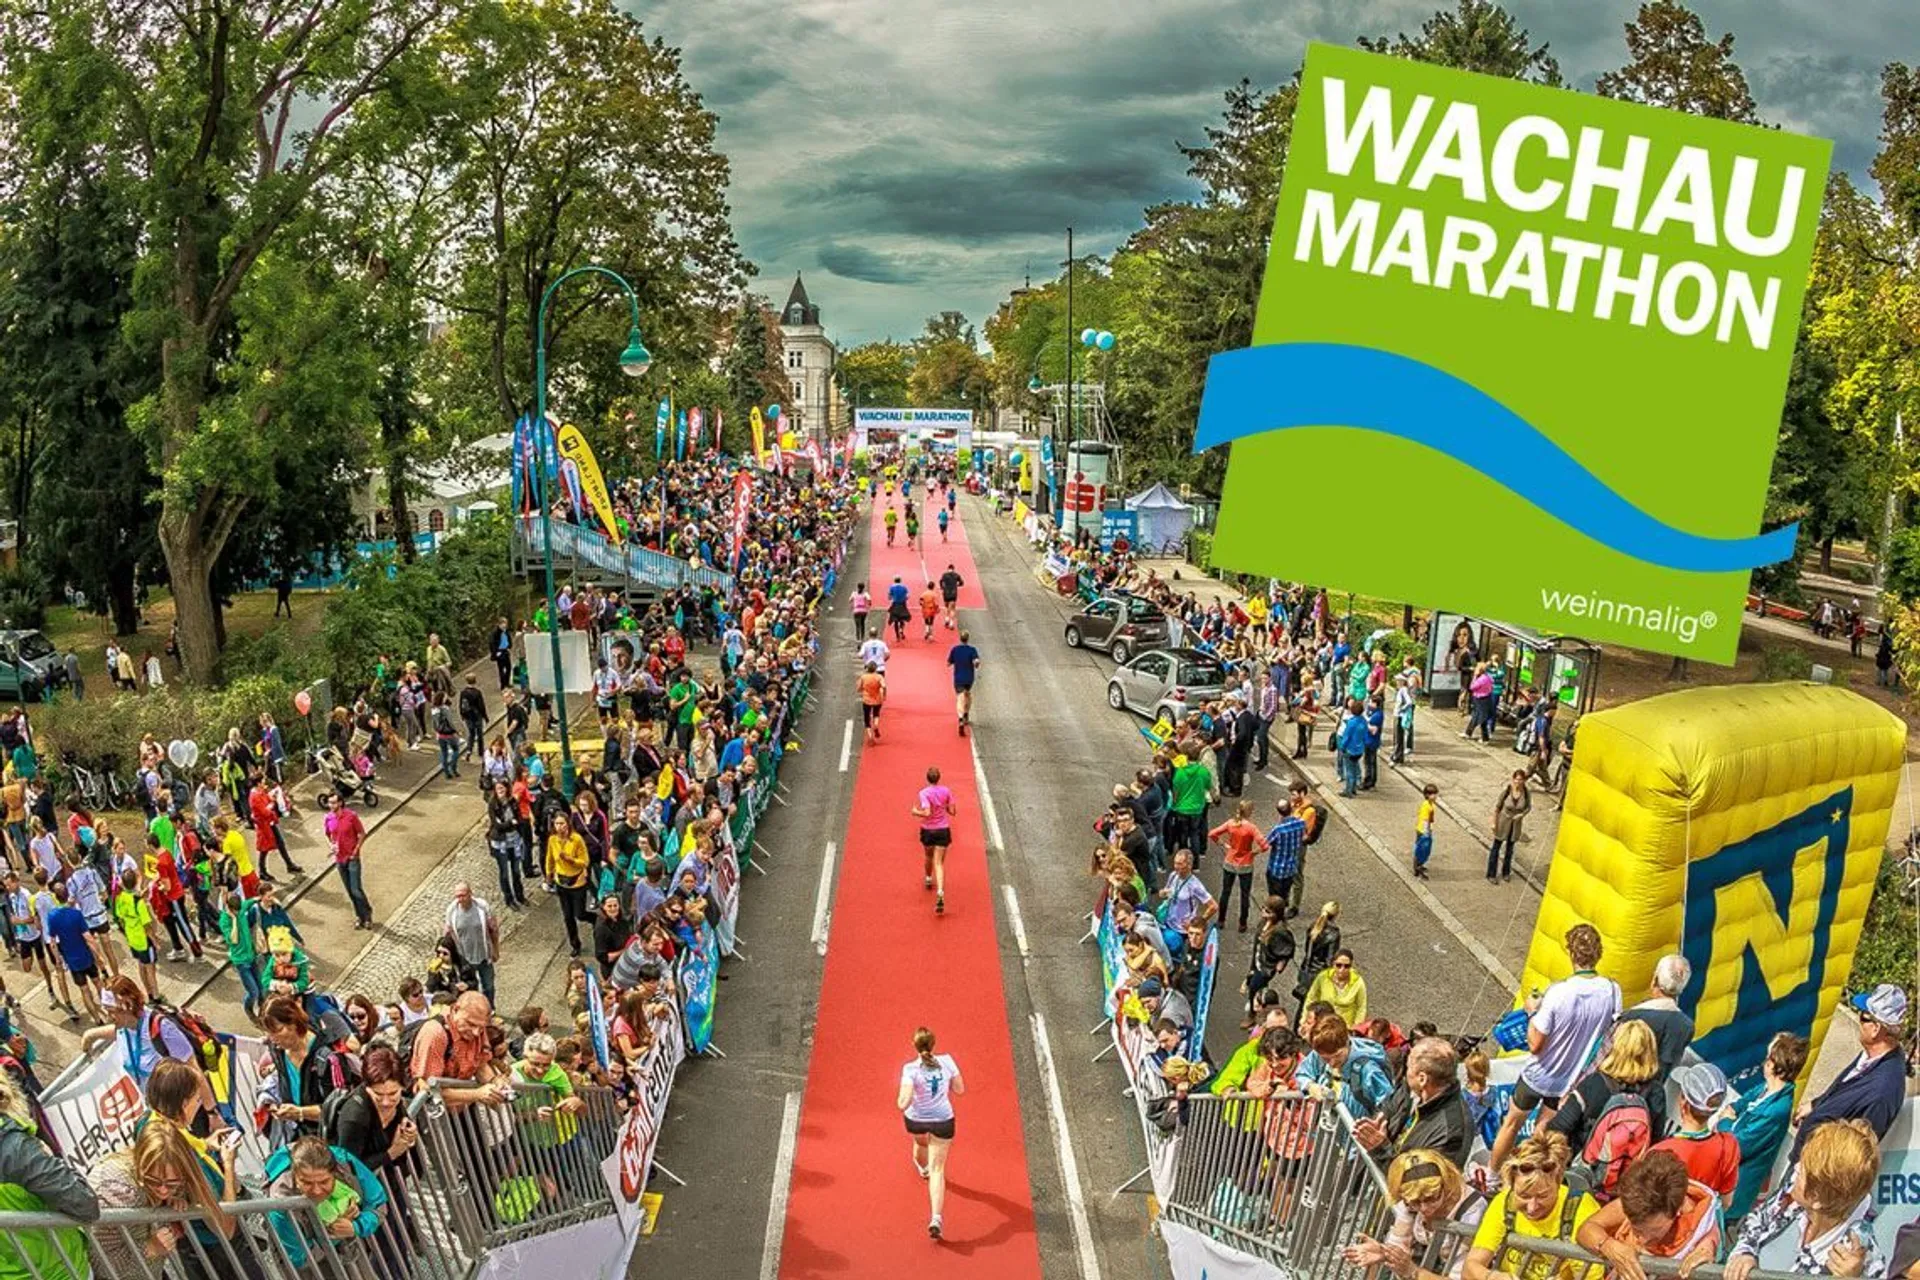 Wachau Marathon